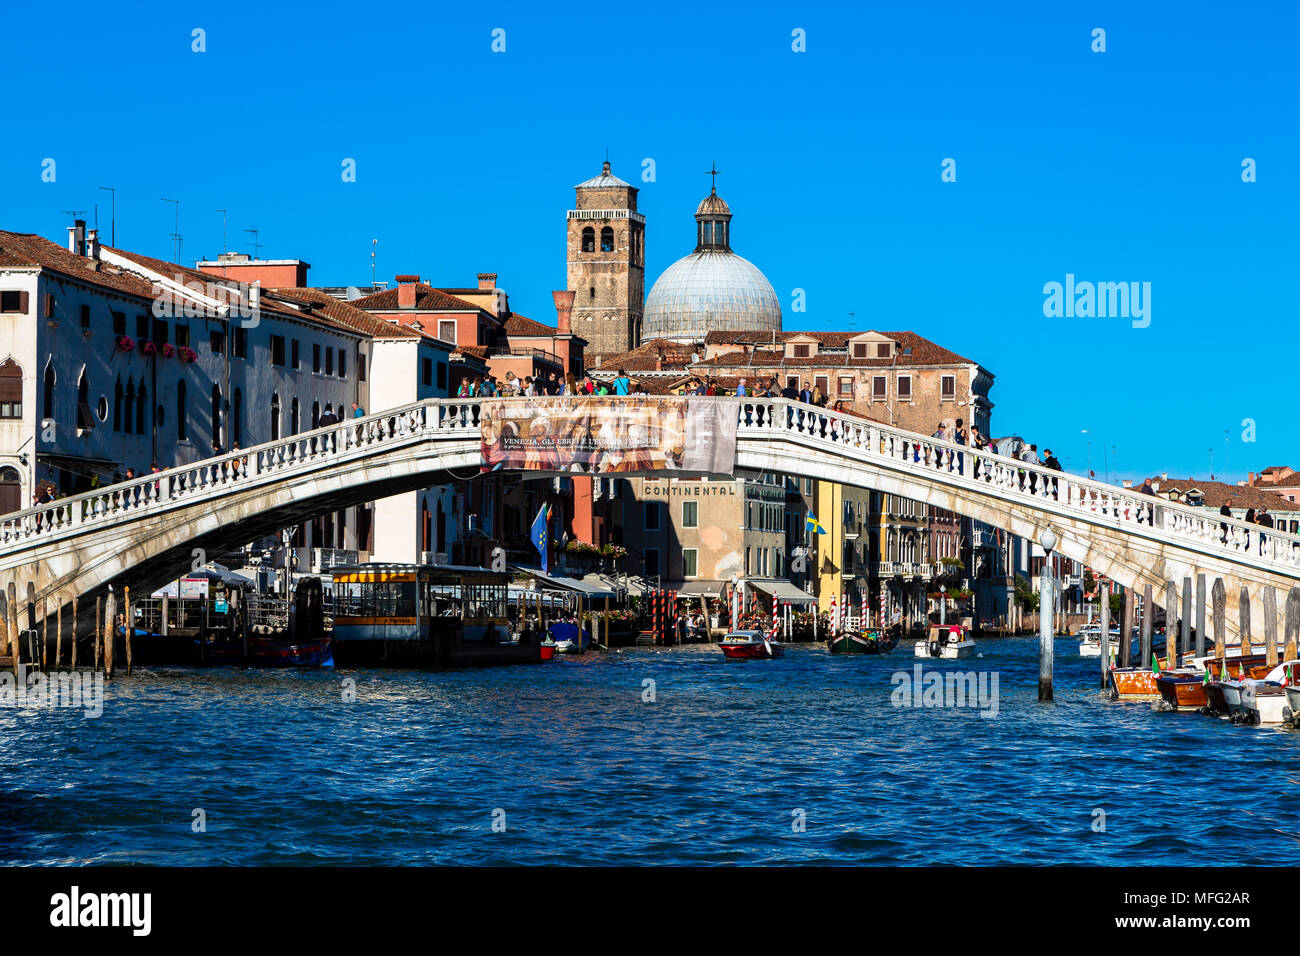 Ponte degli Scalzi, Canal grande, Venice, Italy Stock Photo